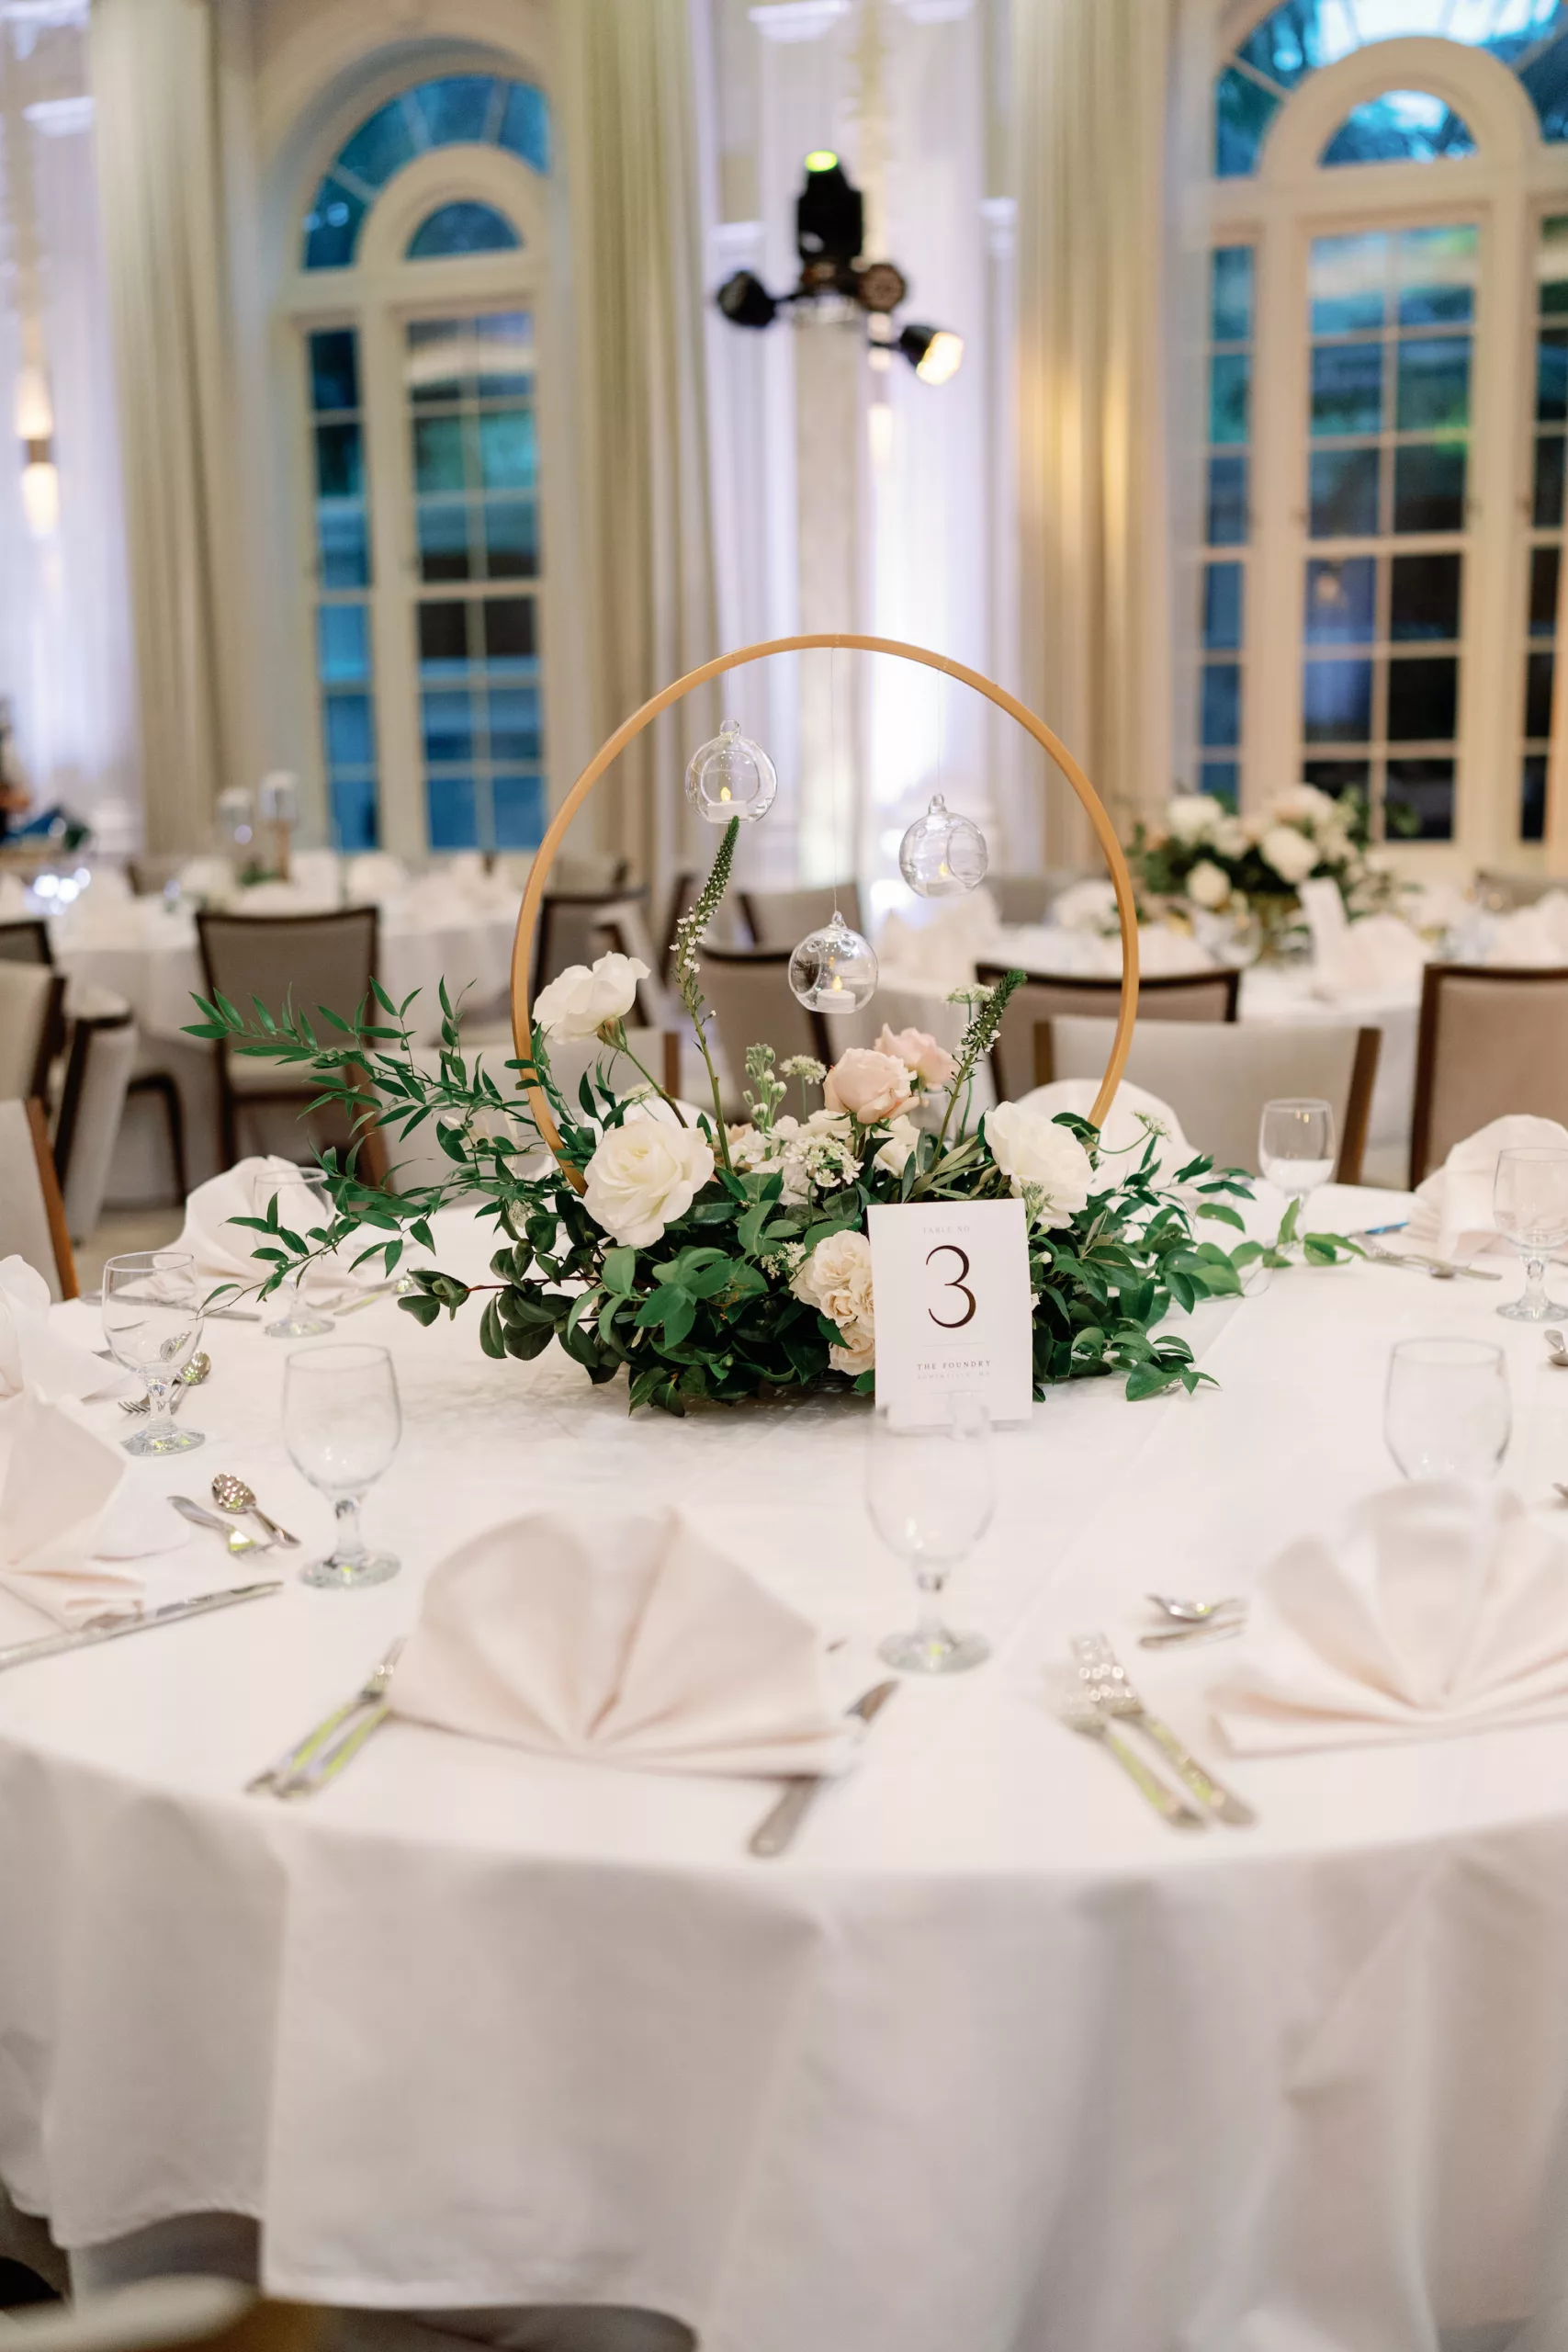 Luxurious White and Gold Grand Ballroom Wedding Reception Decor Ideas | St Pete Event Planner Parties A La Carte